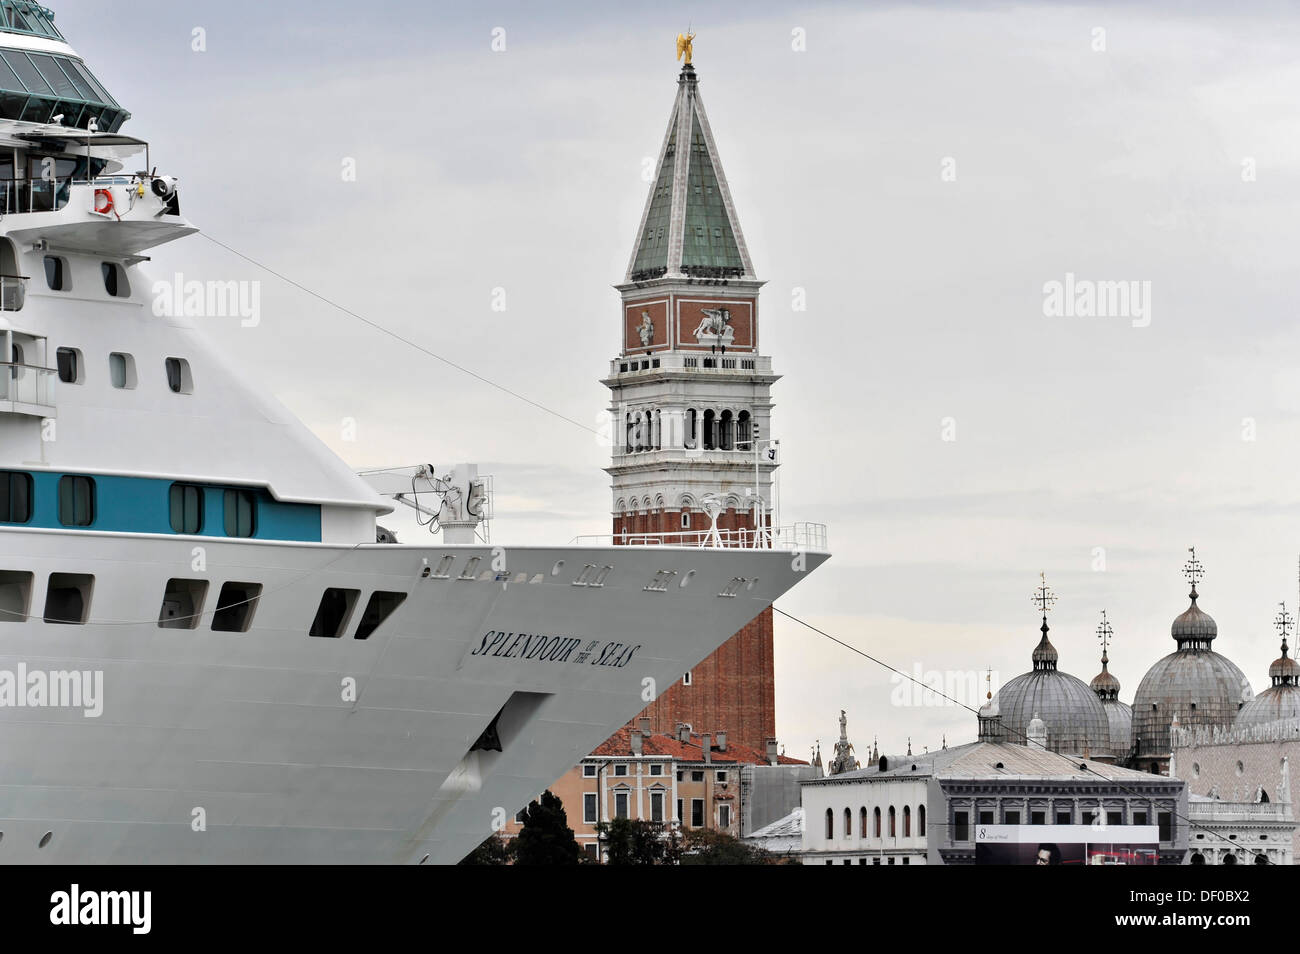 Splendour Of The Seas, a cruise ship, built in 1996, 264.26 m, 2076 passengers, departing, Venice, Veneto, Italy, Europe Stock Photo